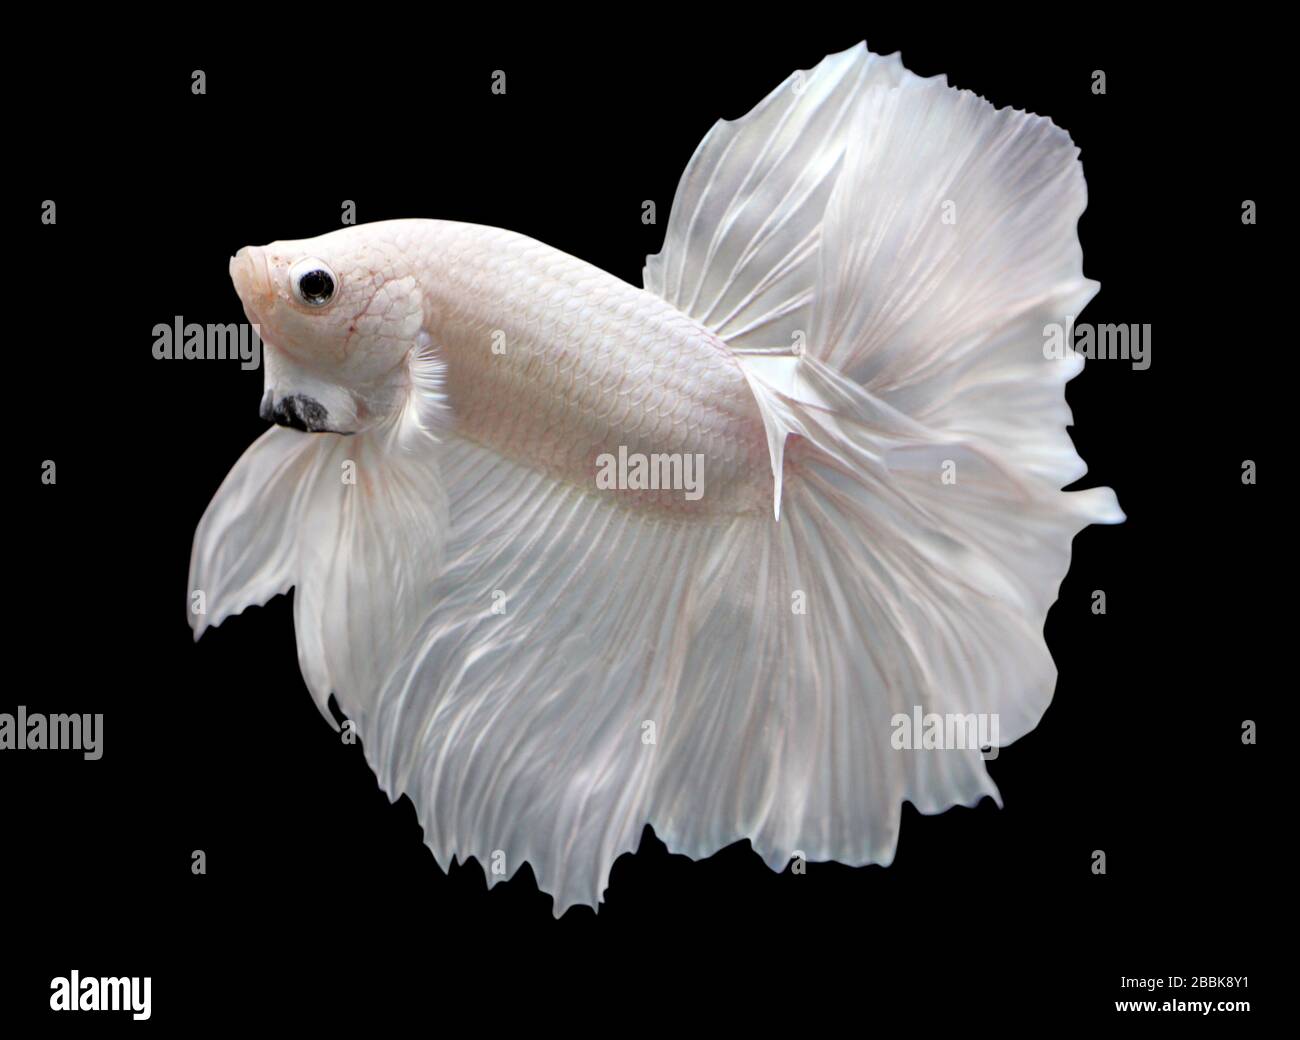 Betta White Platinum Halfmoon HM Male or Plakat Fighting Fish Splendens On Black Background. Stock Photo